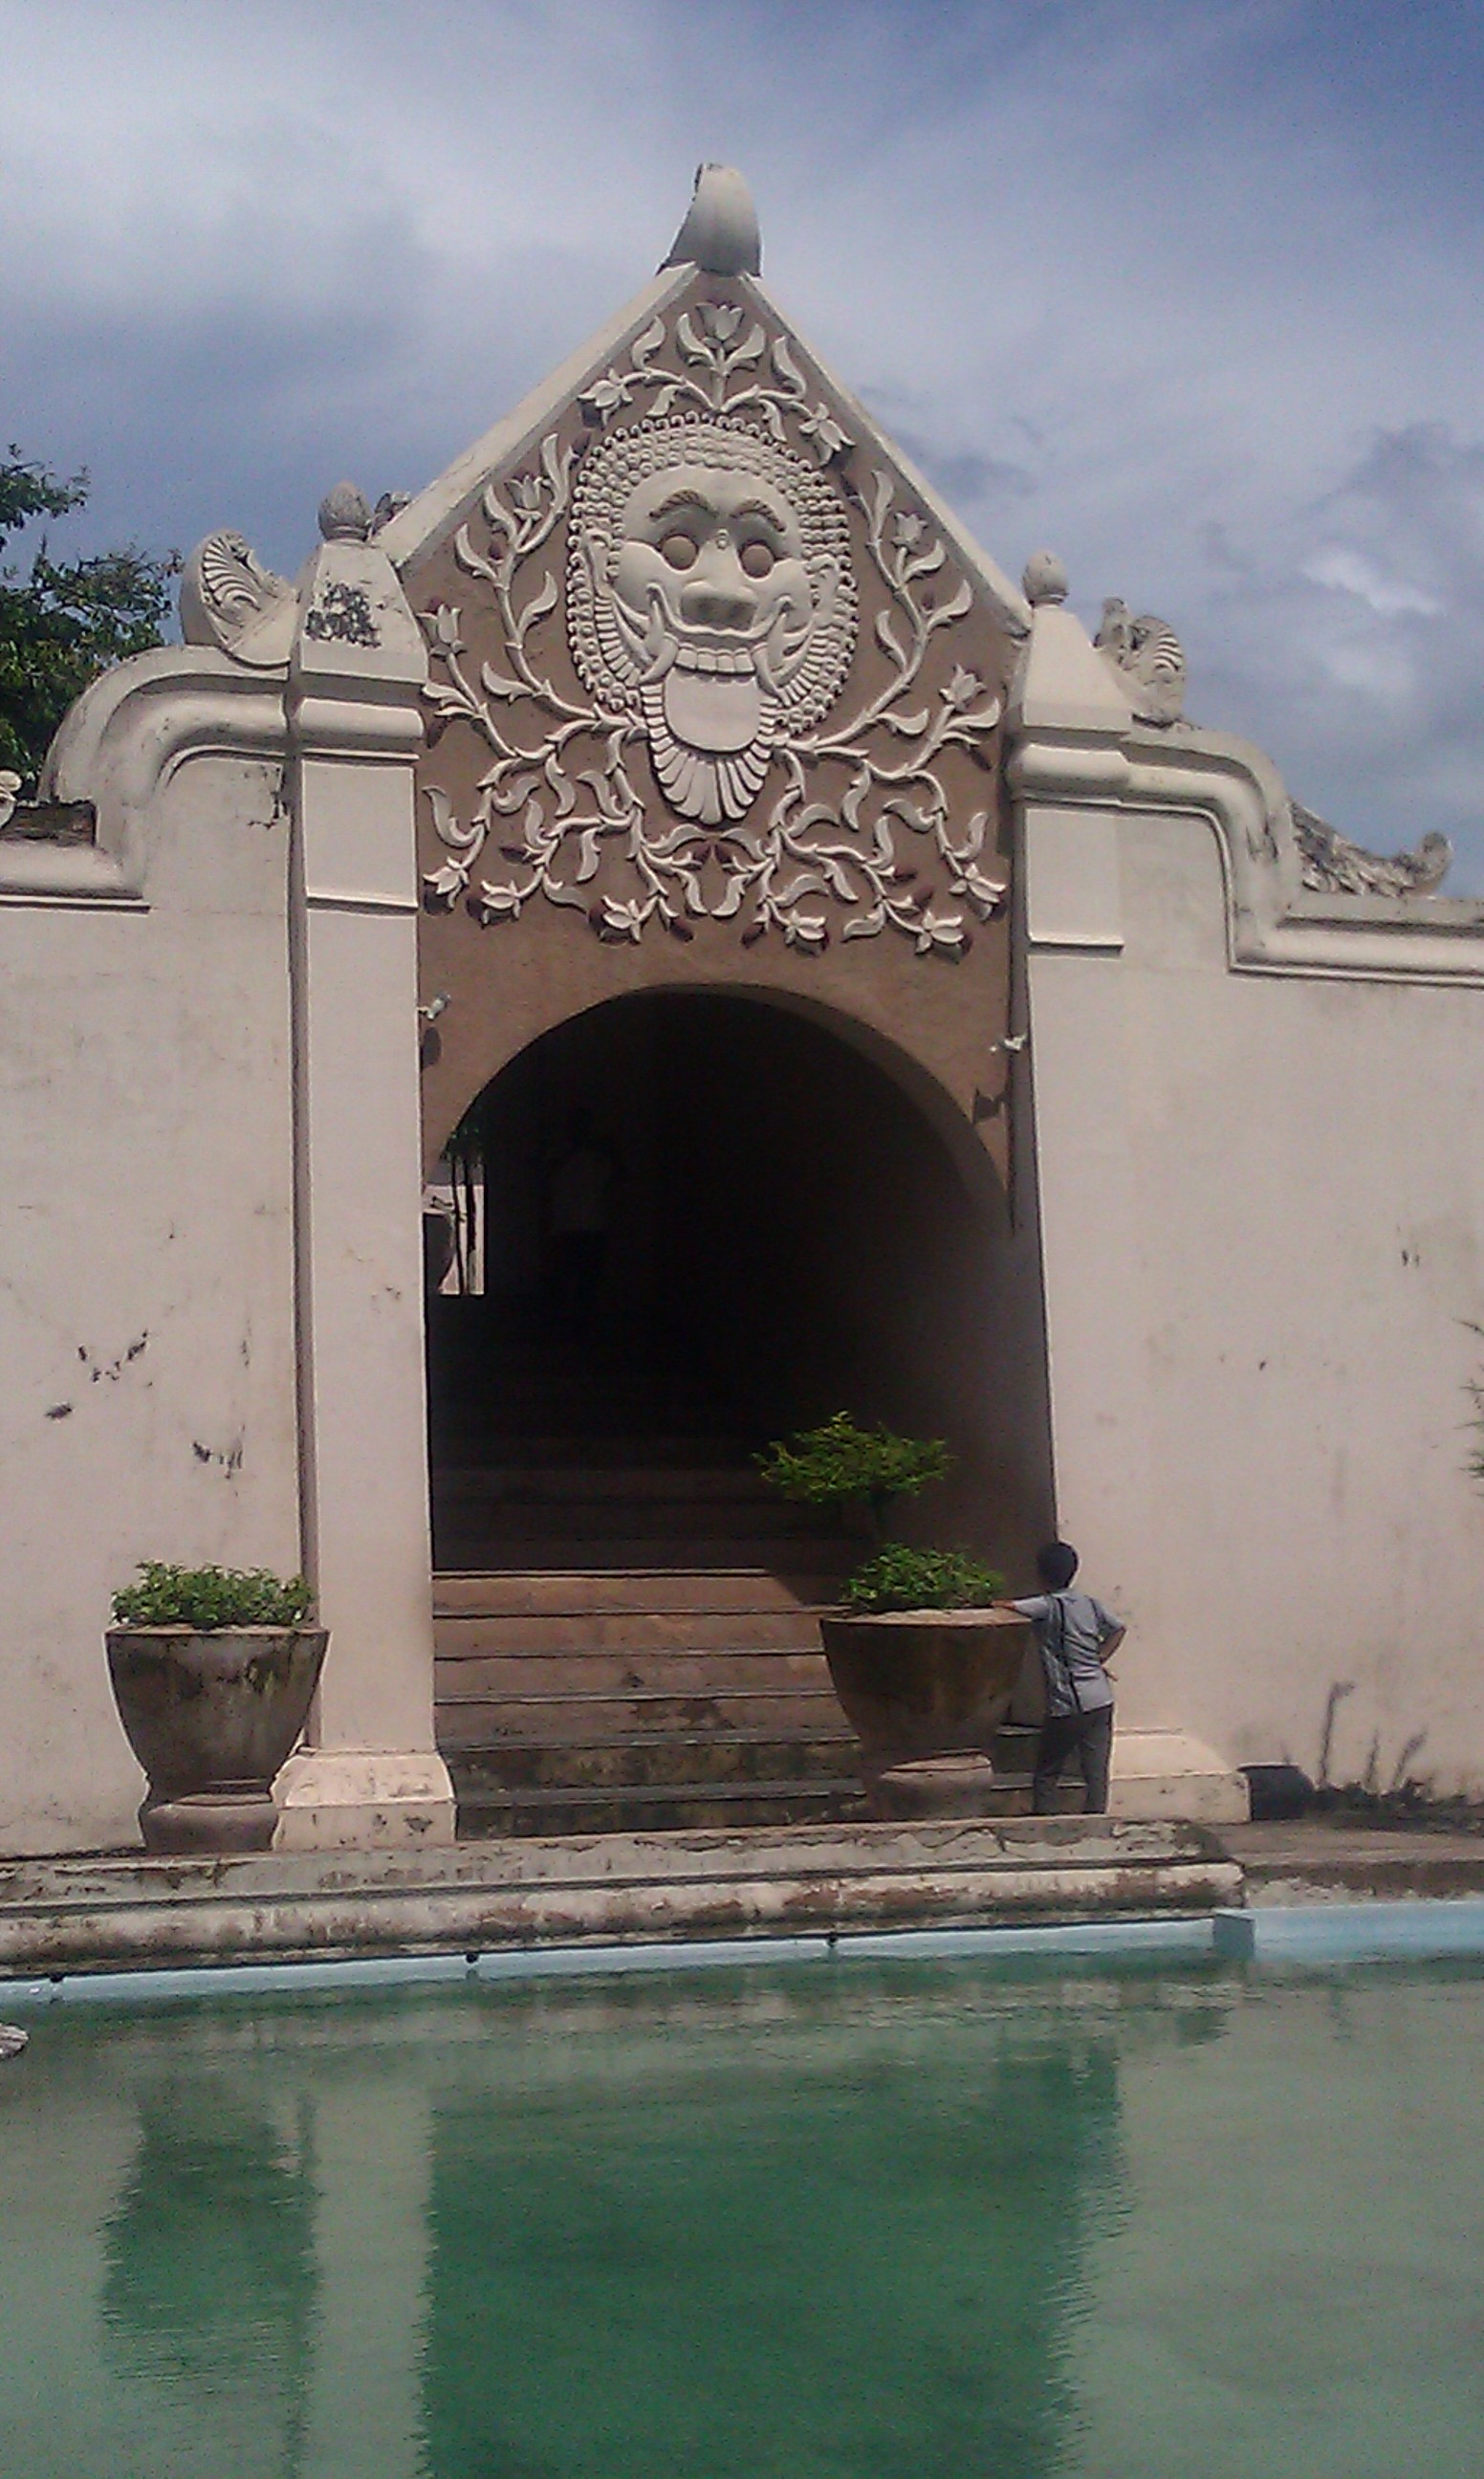 File:Water castle Yogyakarta taman sari 03.jpg - Wikimedia Commons